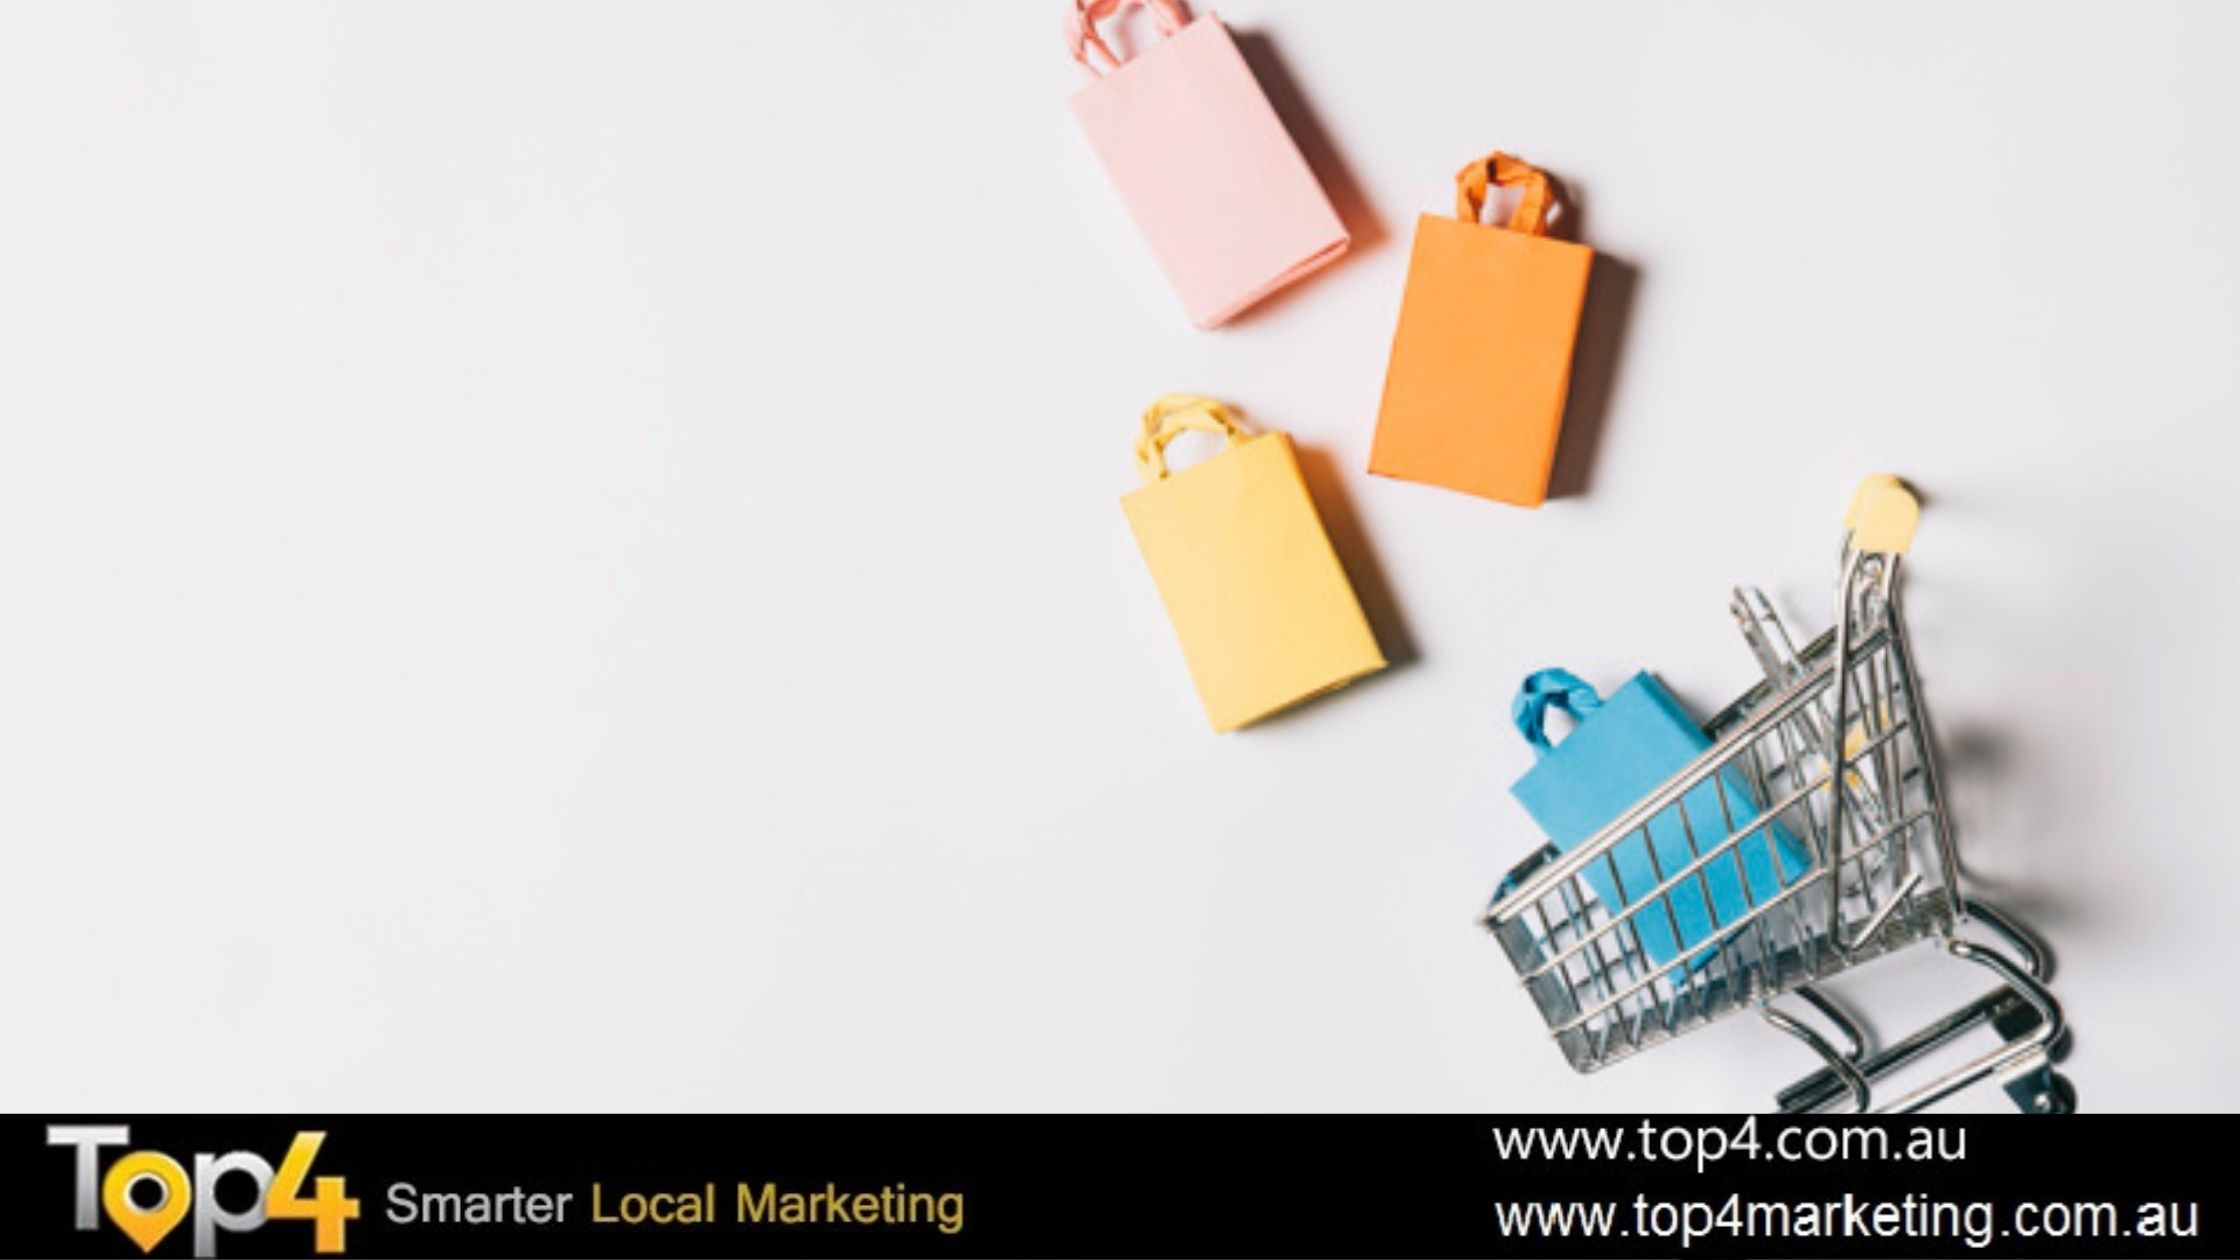 Sales Promotion - Top4 Marketing